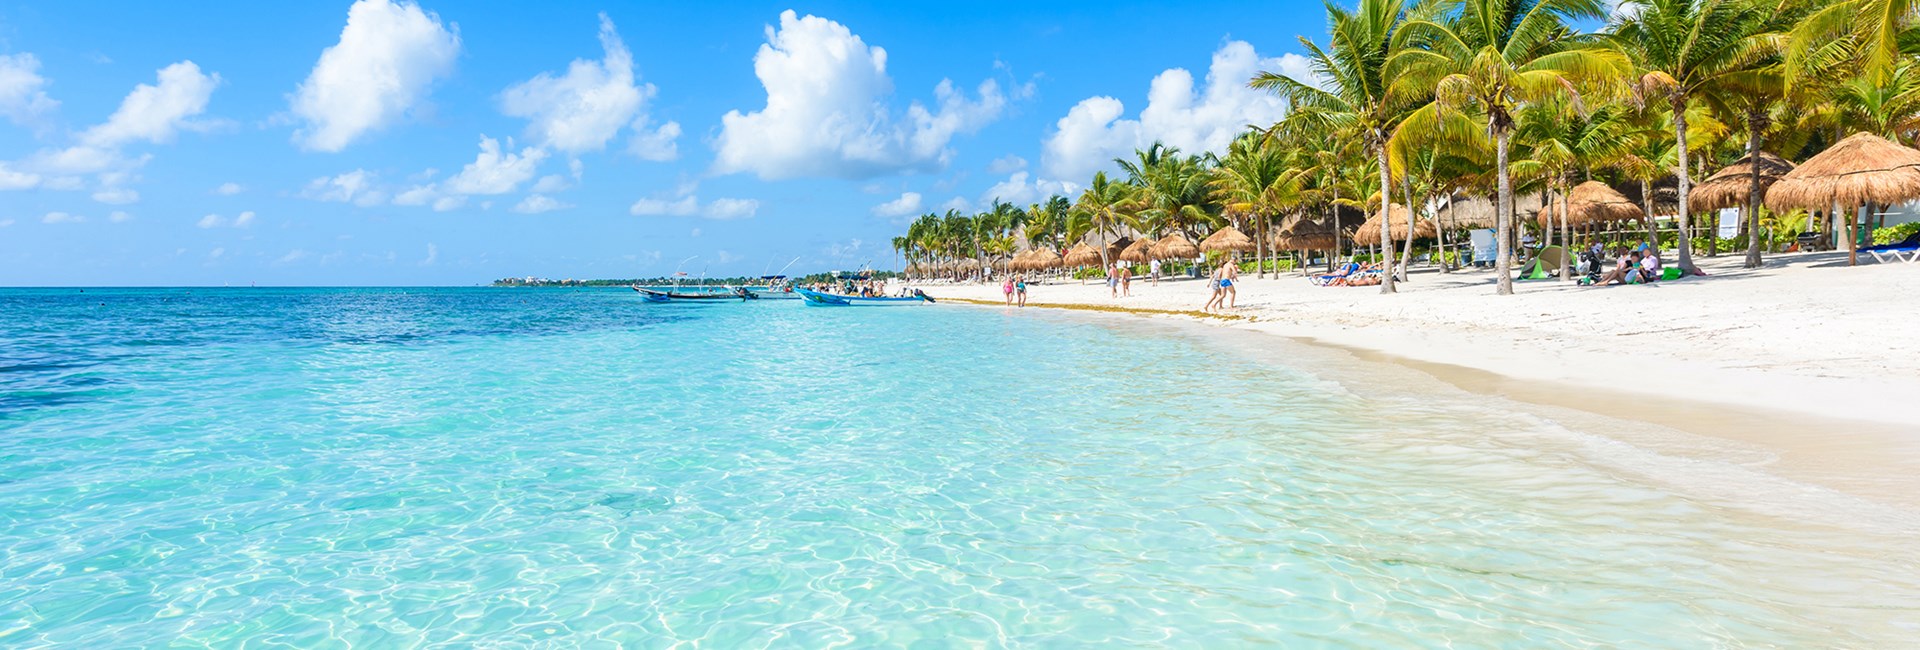 Palm trees behind a white sand tropical beach with a crystal clear blue sea